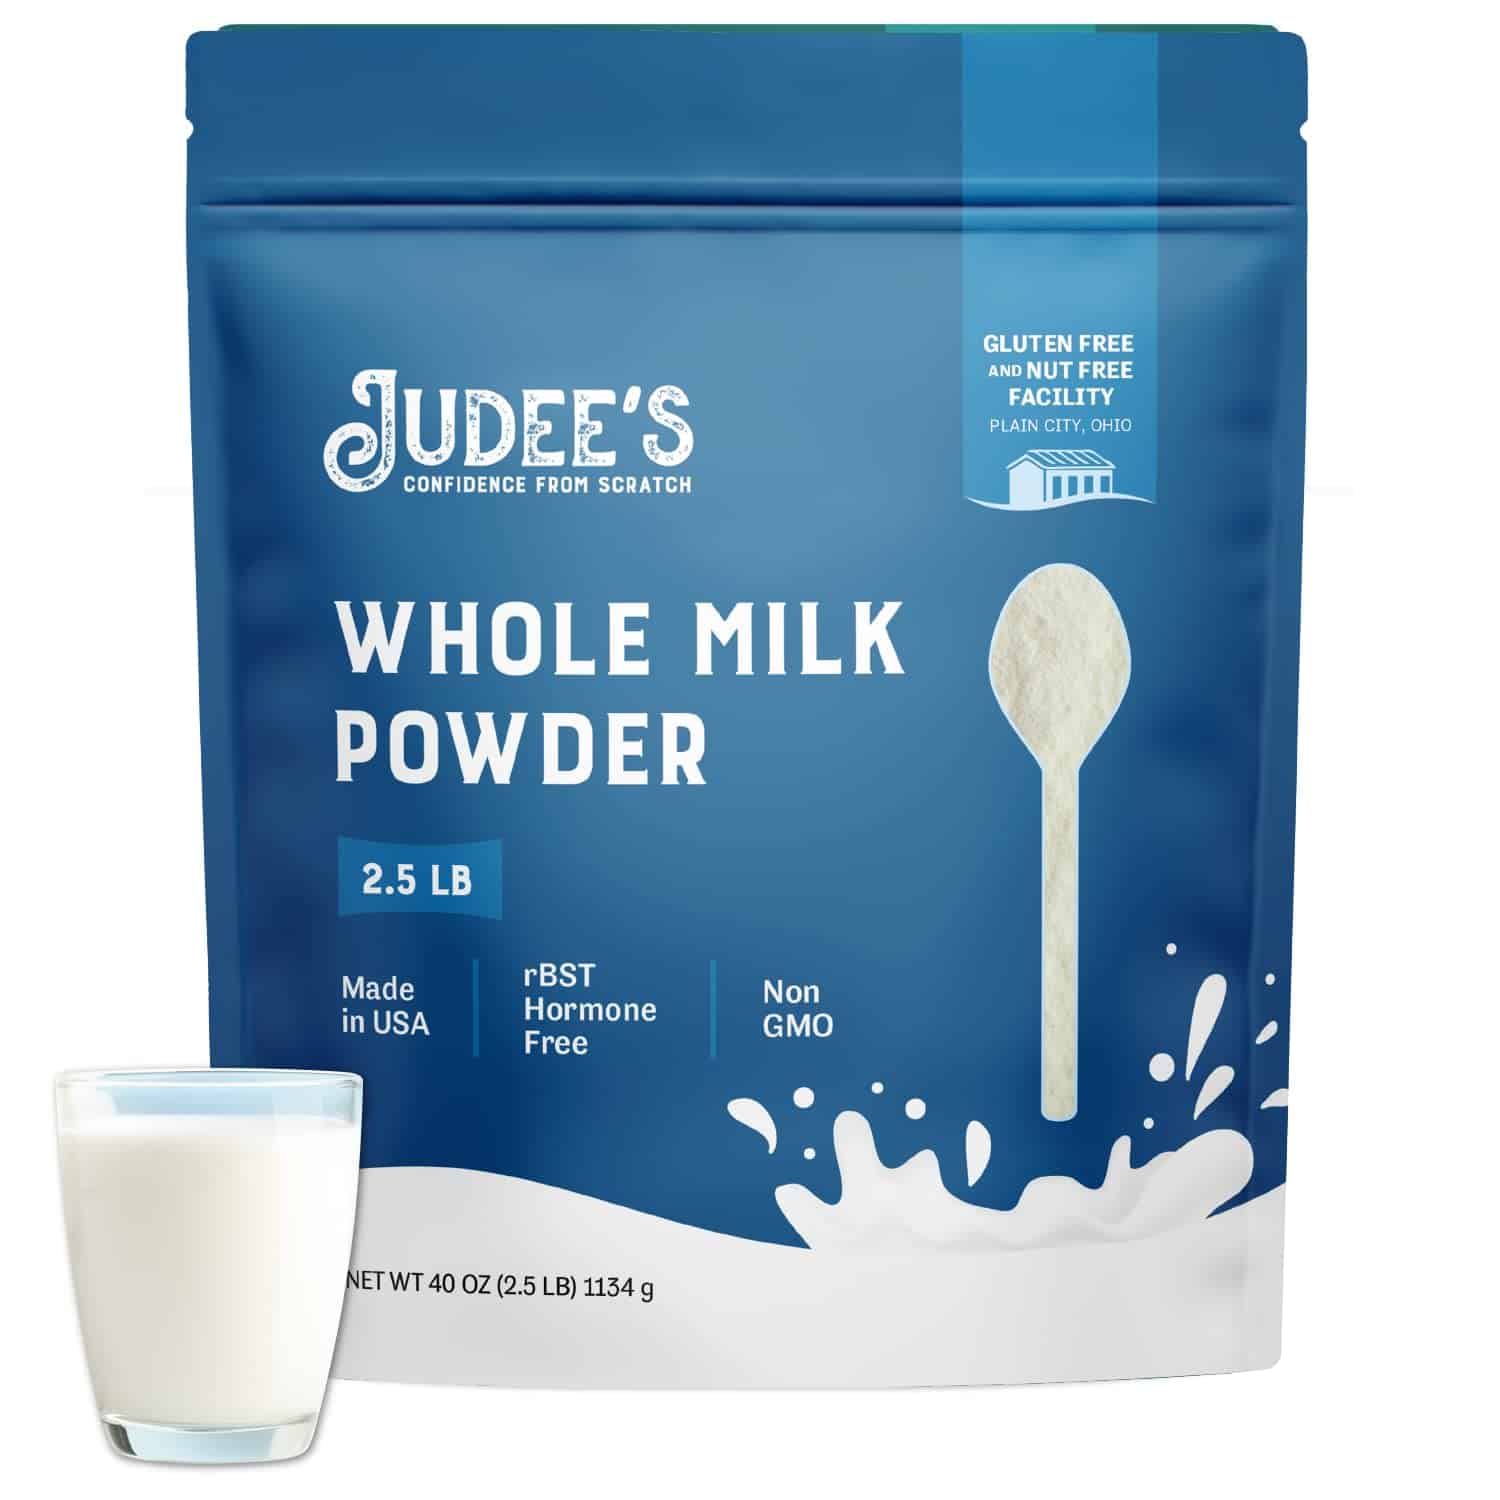 Judee's Pure Whole Milk